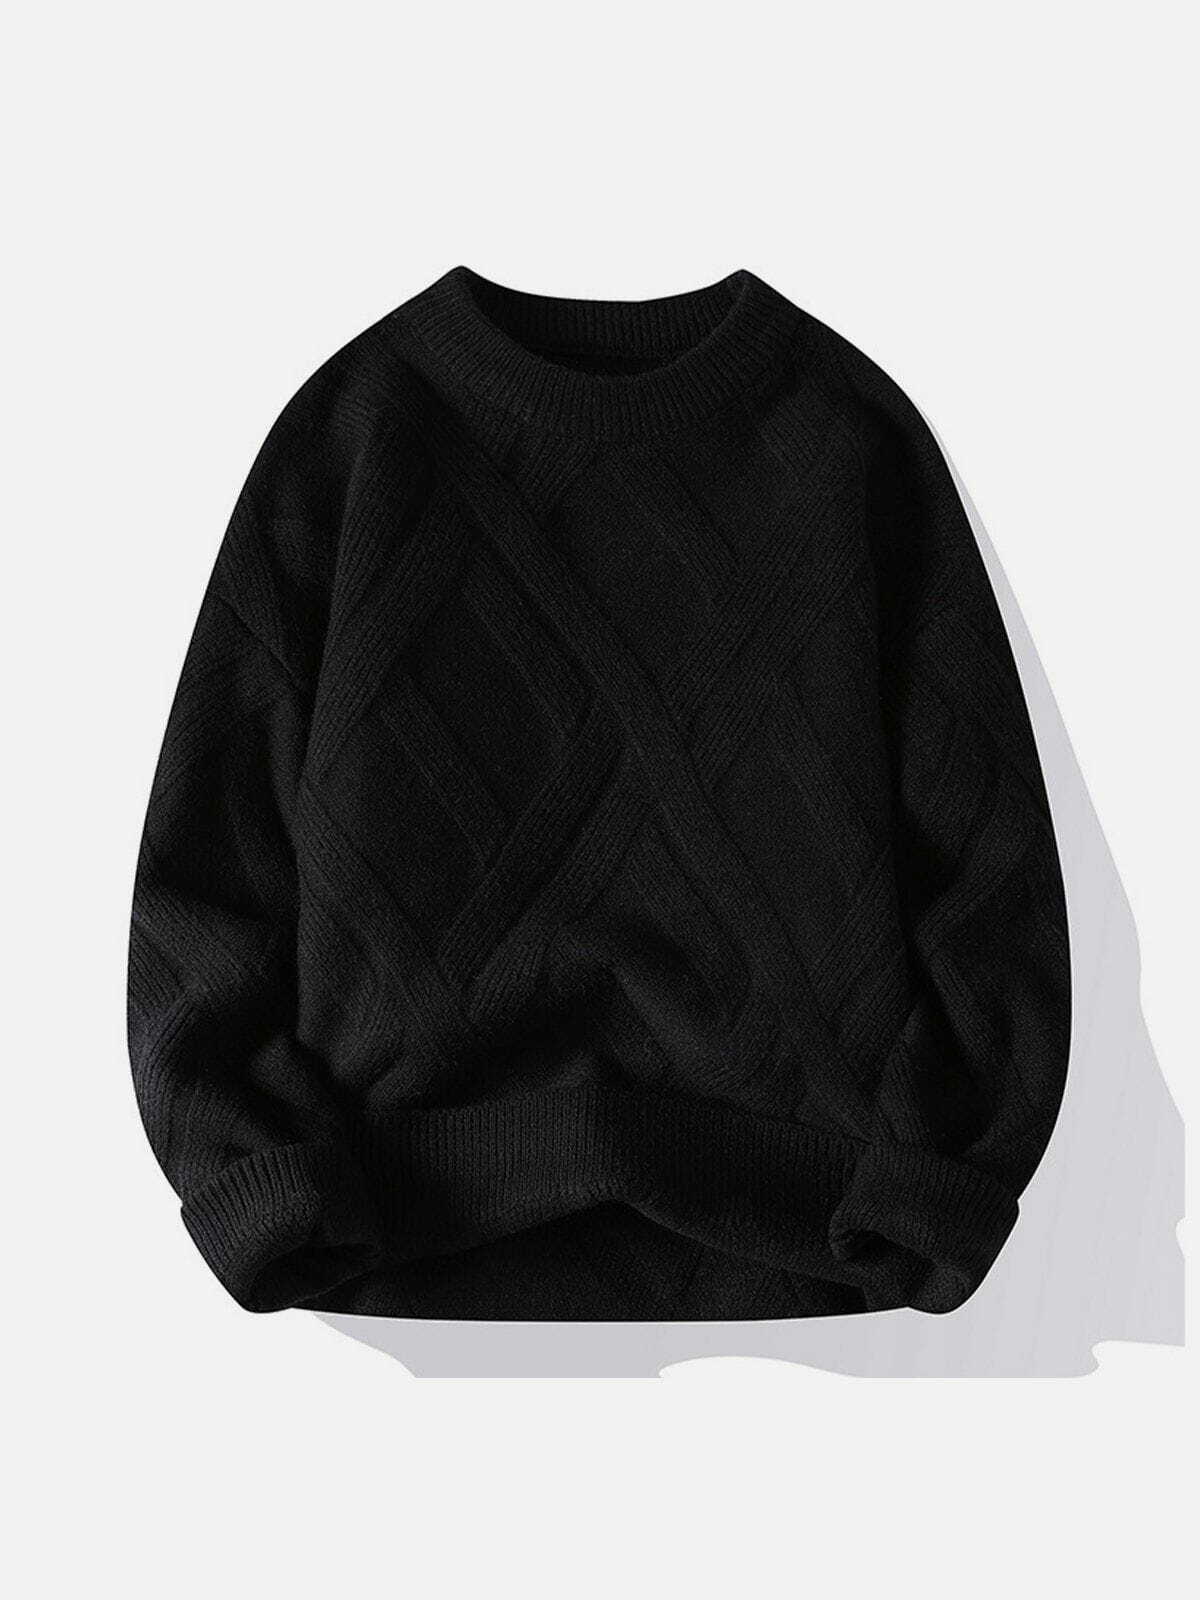 jacquard knit streetwear sweater edgy & retro style 8217